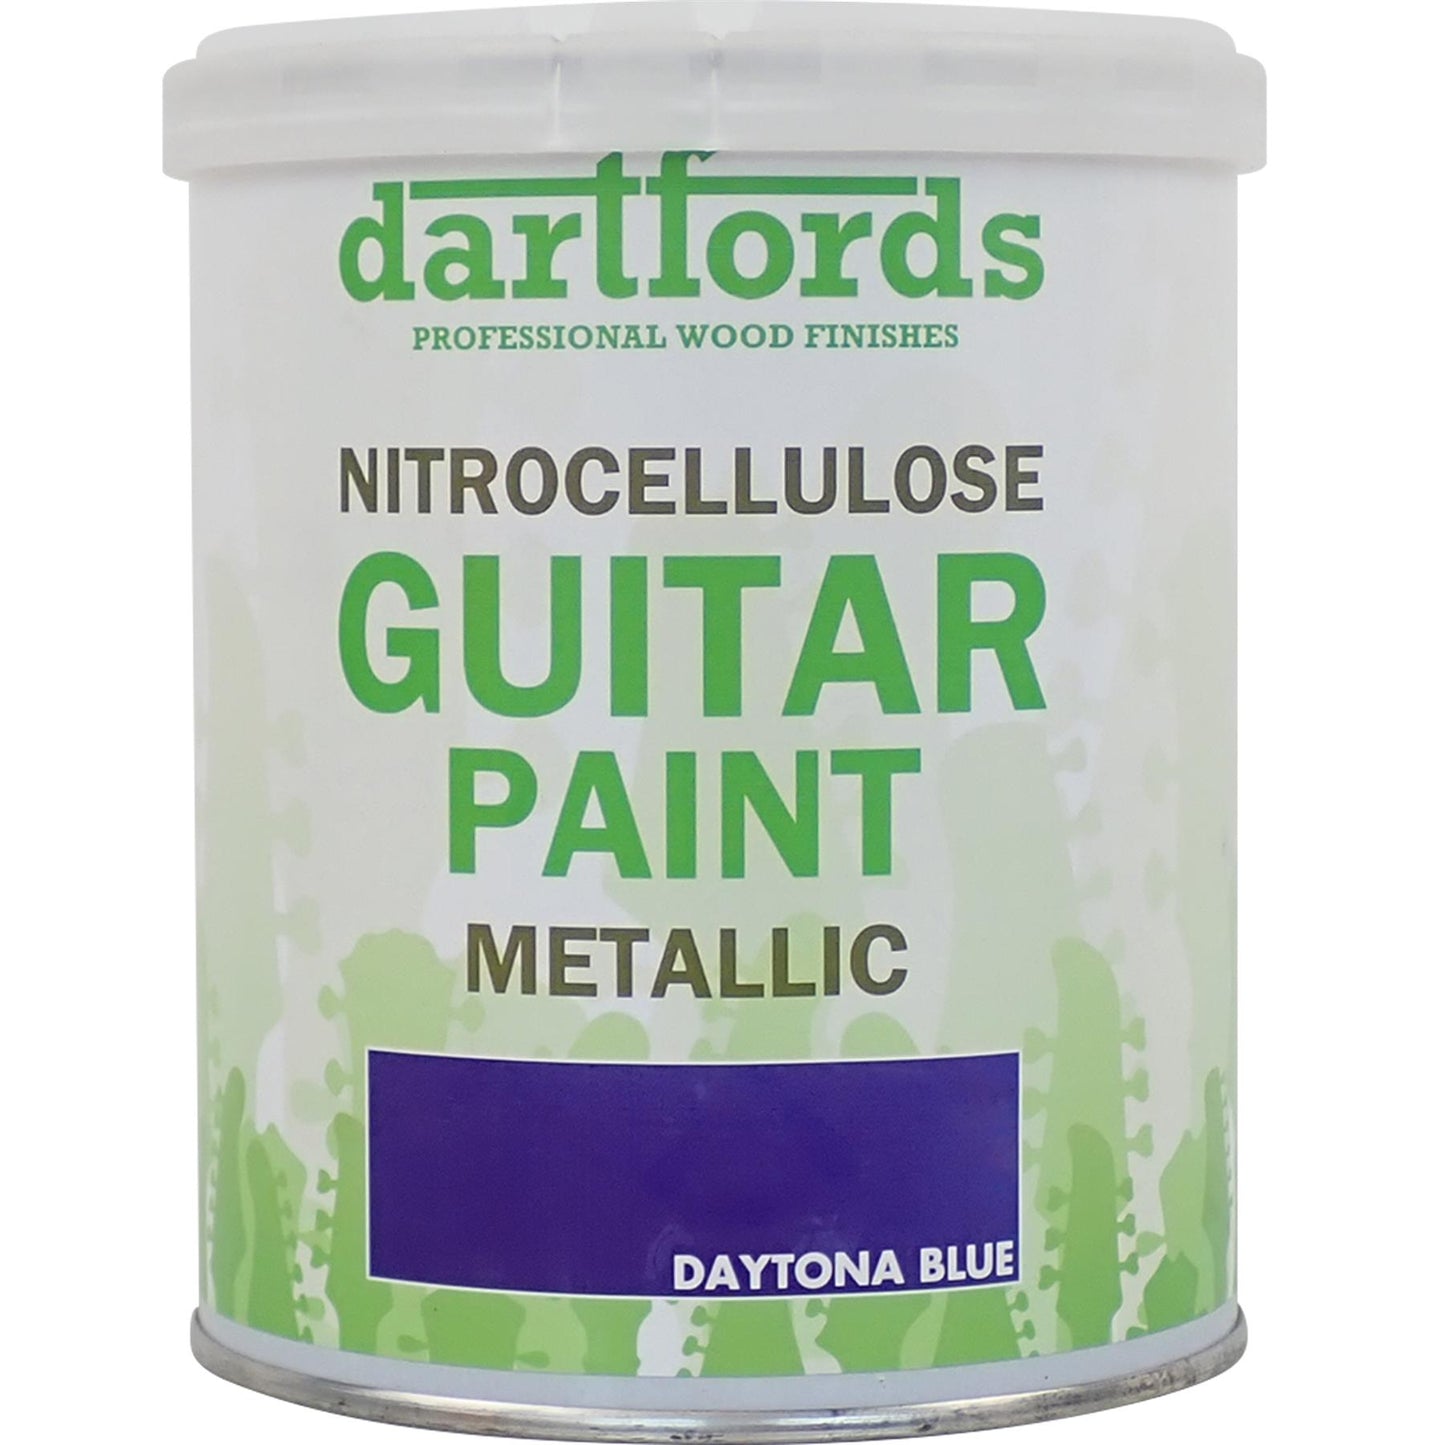 dartfords Daytona Blue Metallic Nitrocellulose Guitar Paint - 1 litre Tin